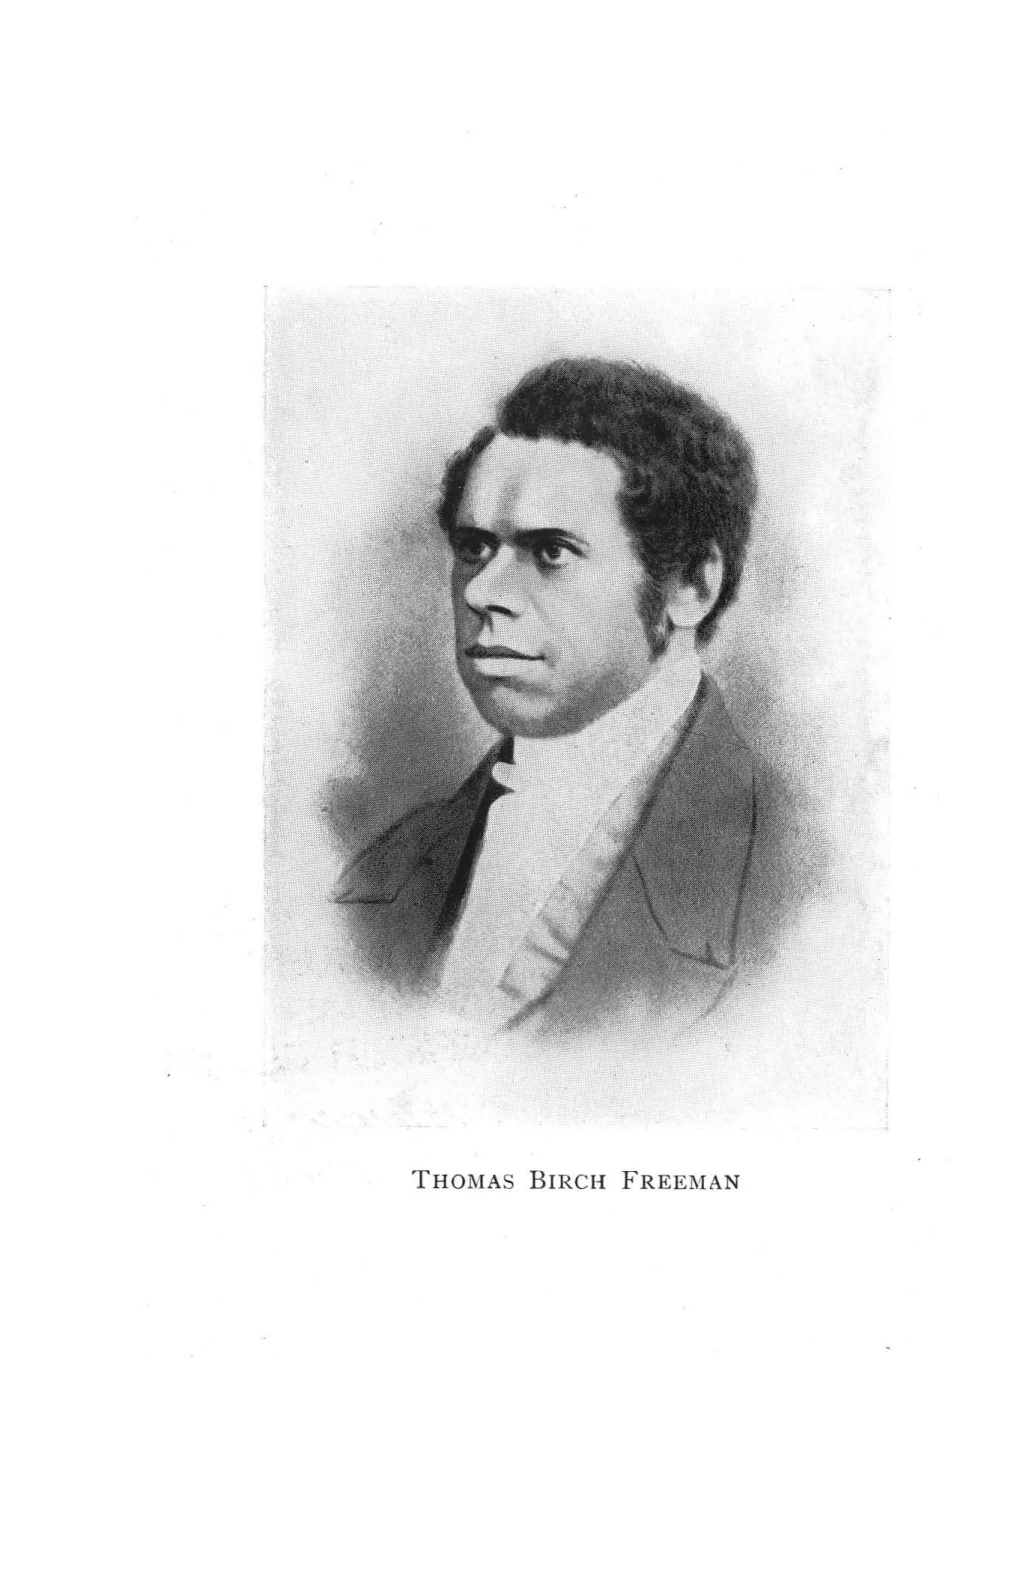 Thomas Birch Freeman the Son of an African